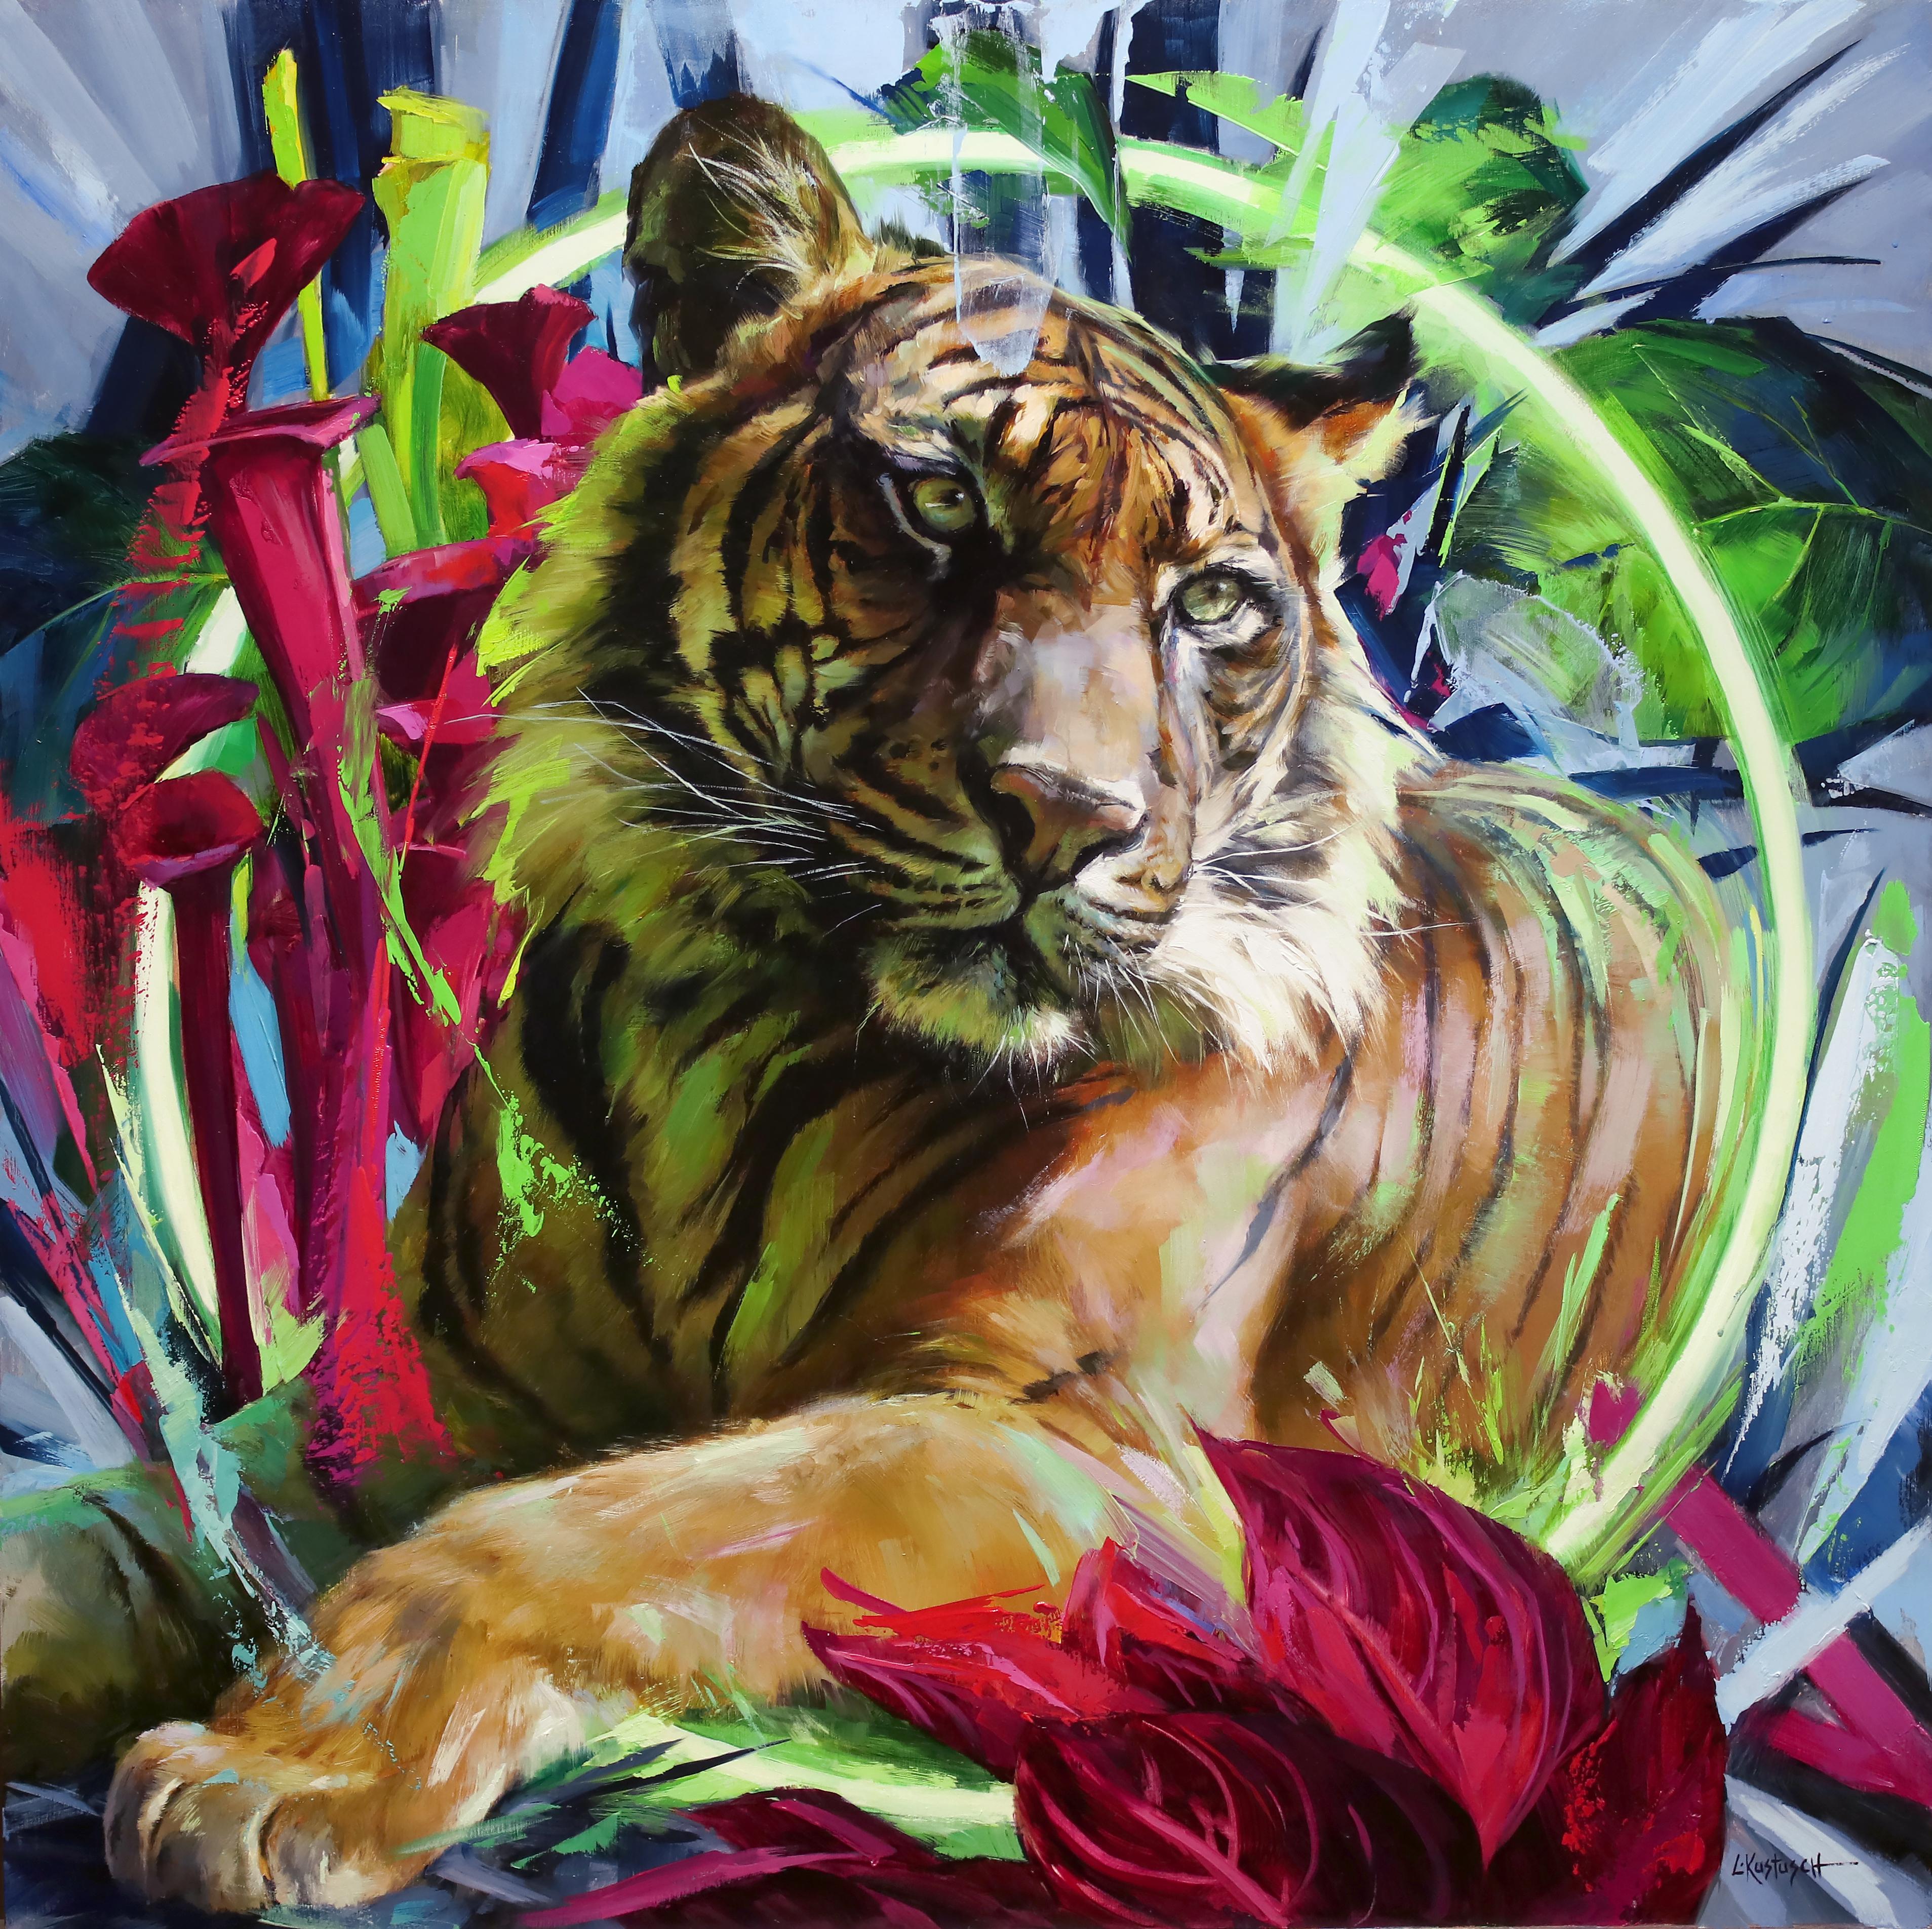 Lindsey Kustusch Figurative Painting - "The Sumatran Tiger" - Original Oil Painting of an Endangered Big Cat